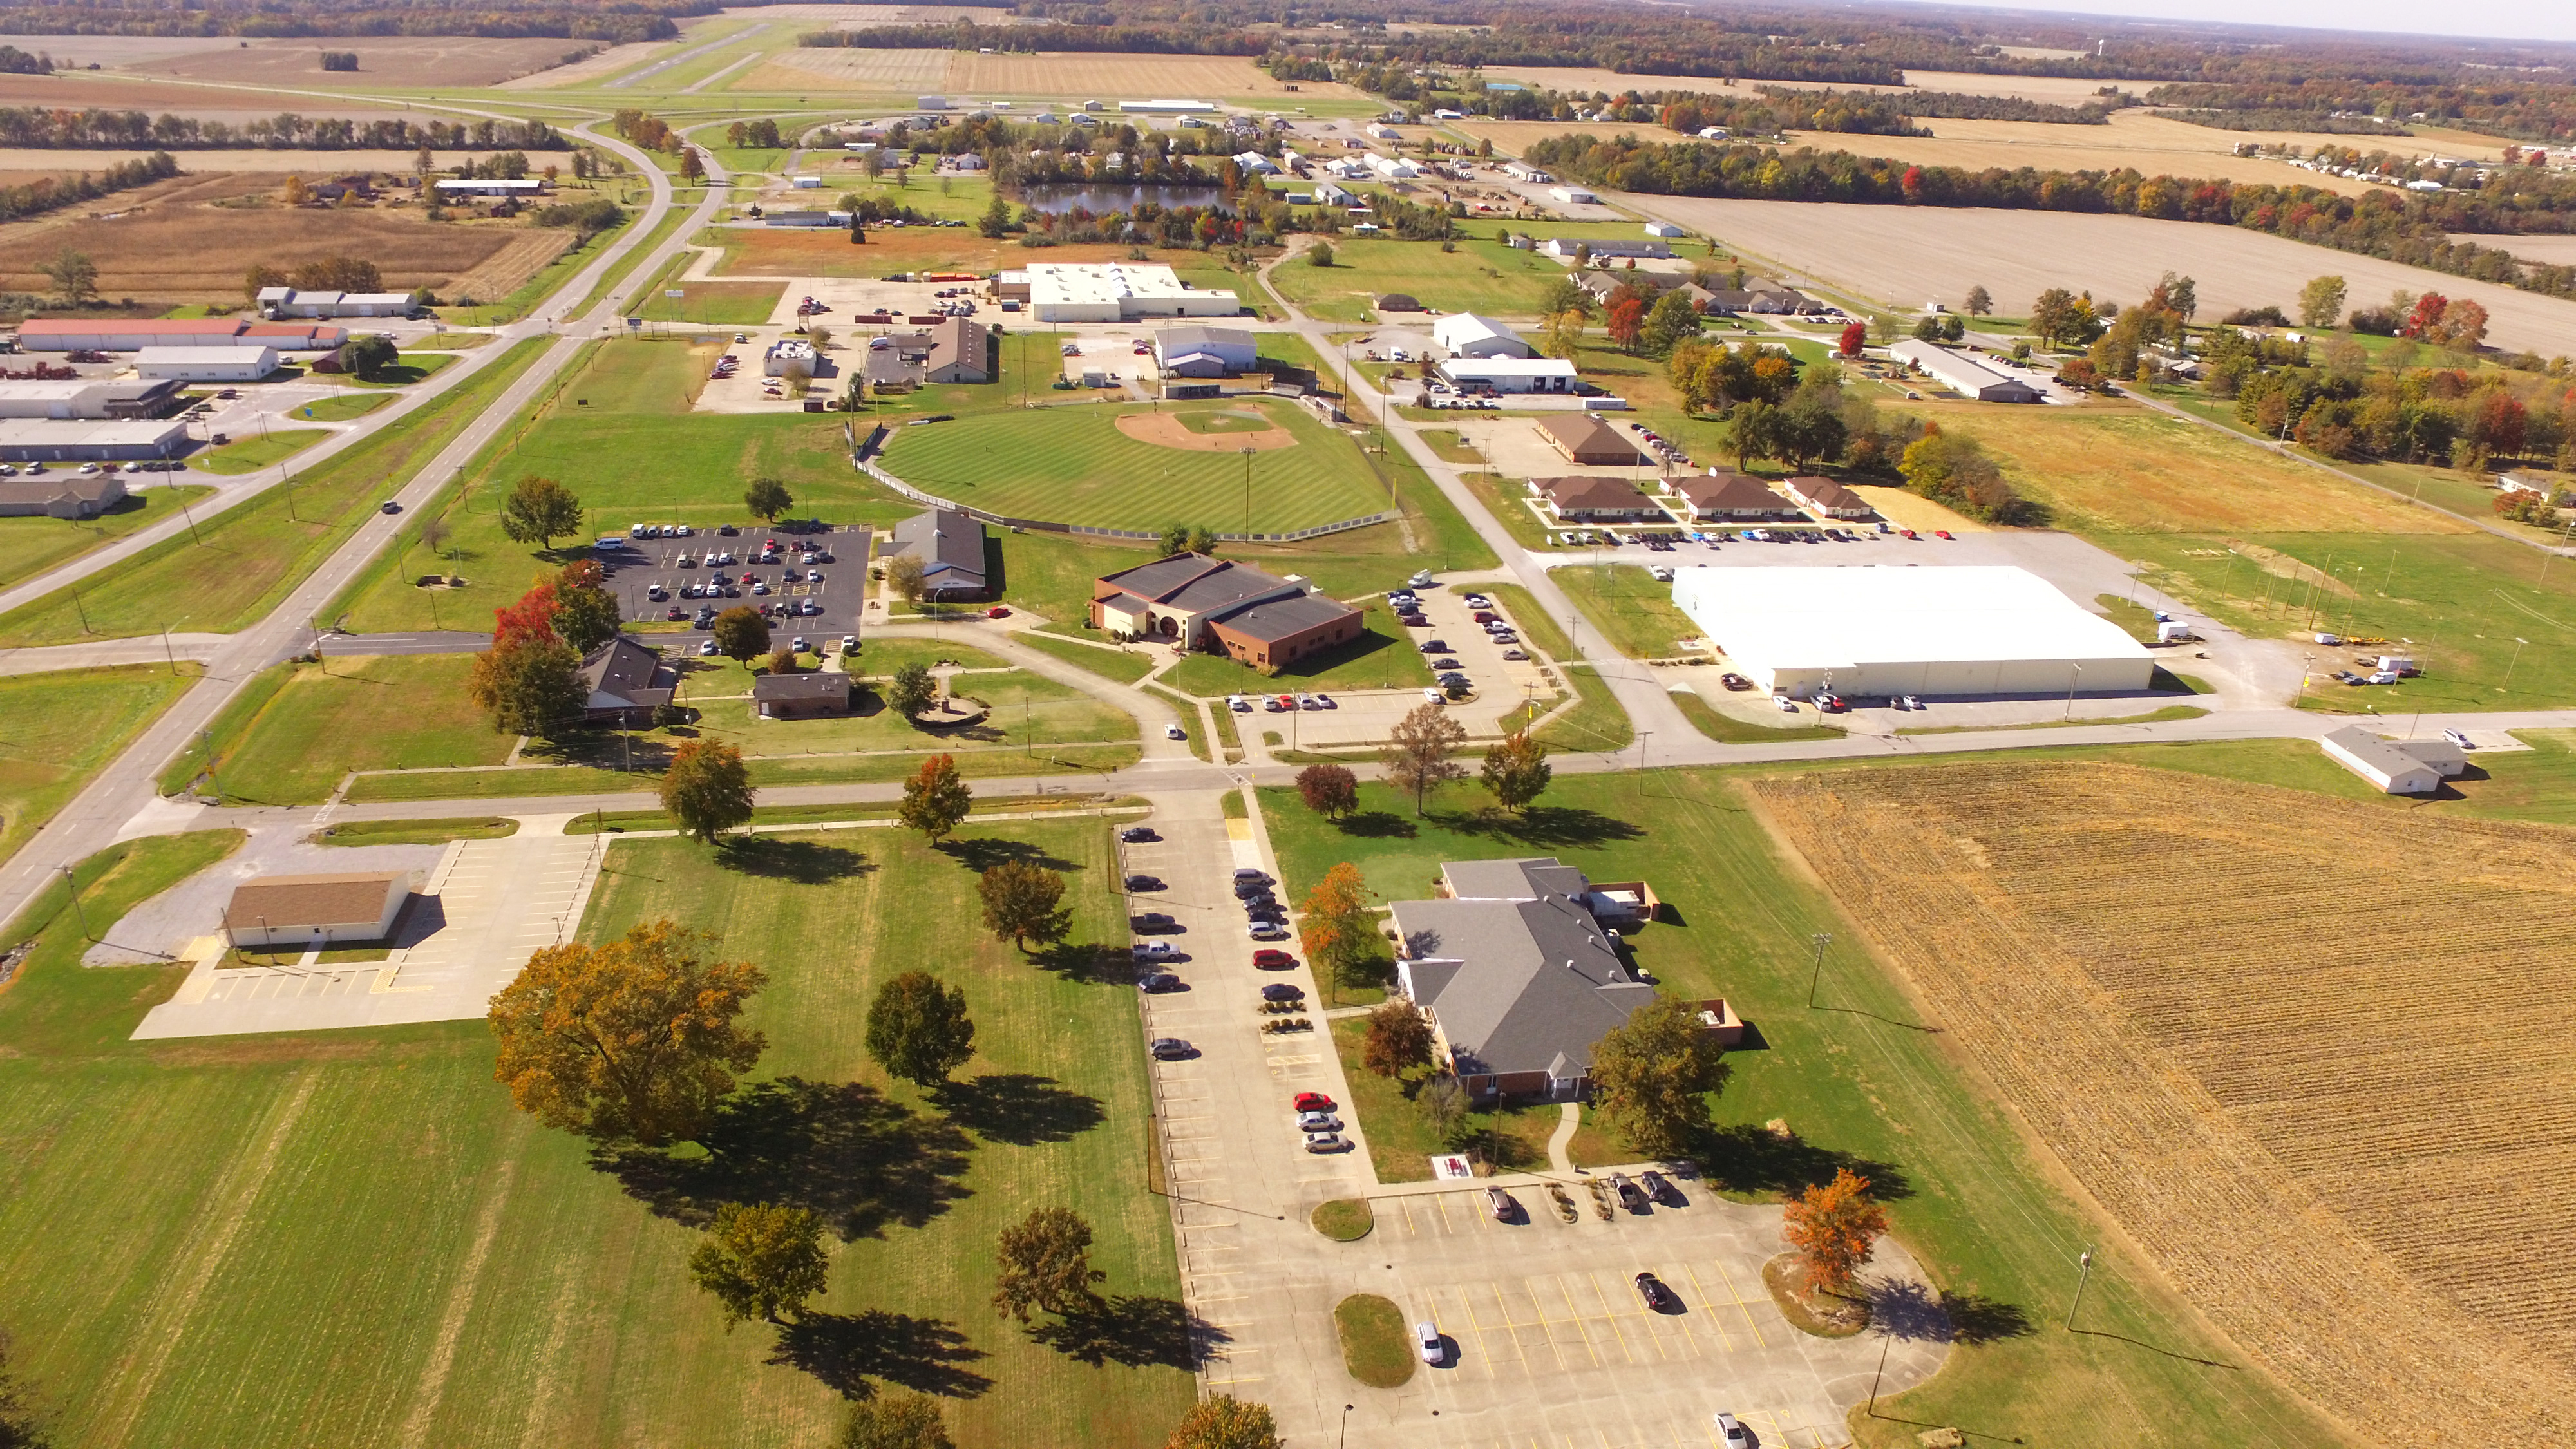 Drone image of FCC campus